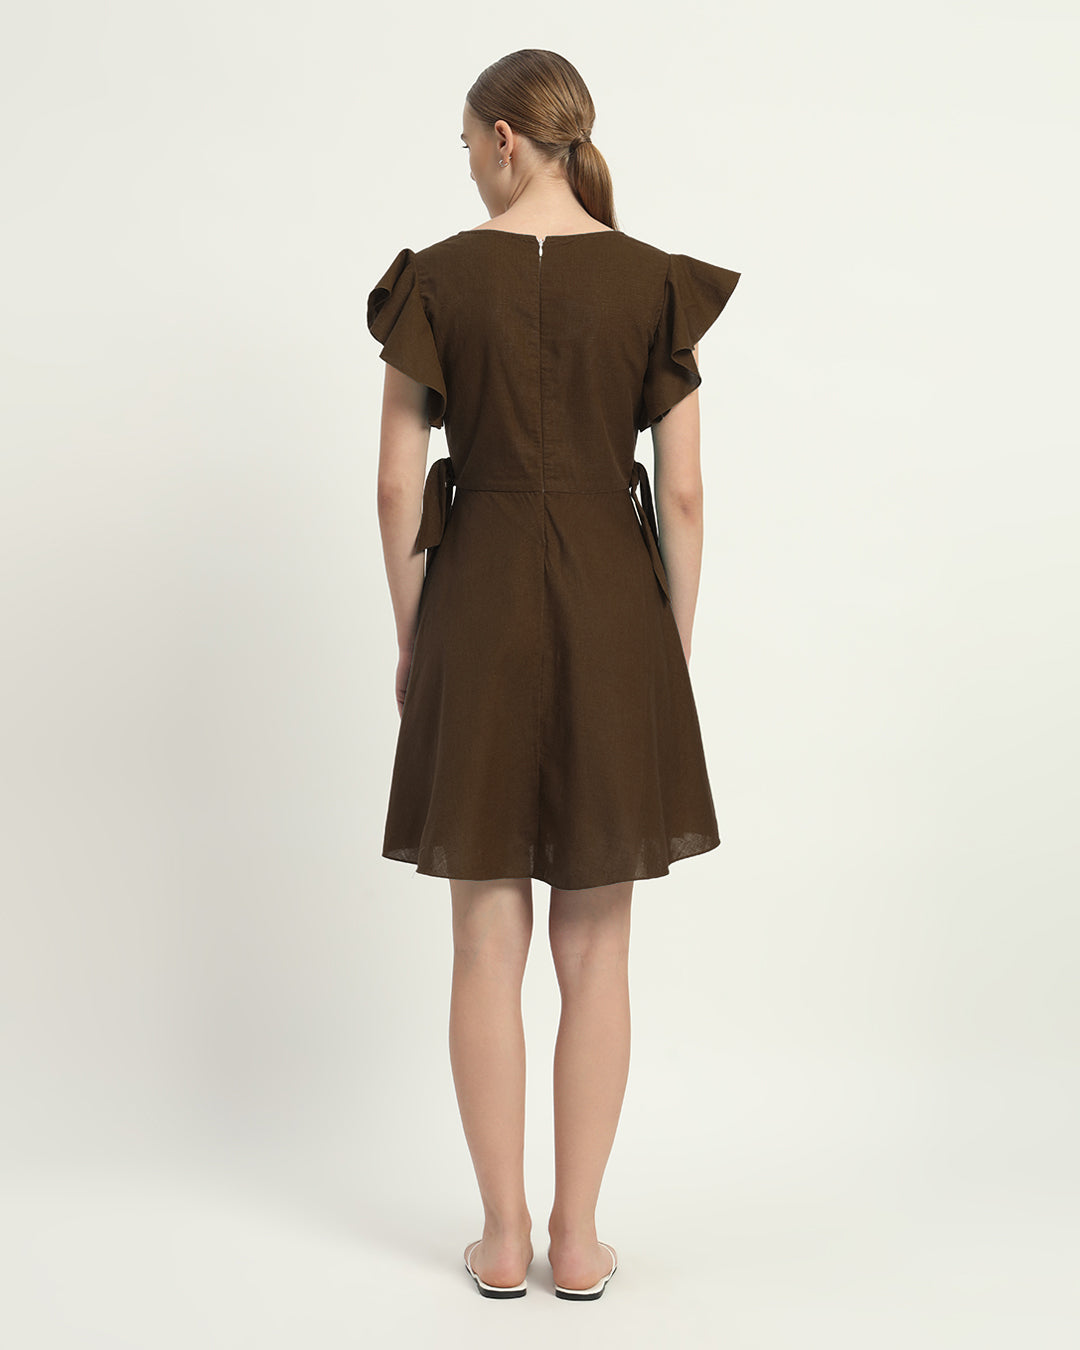 The Nutshell Fairlie Cotton Dress